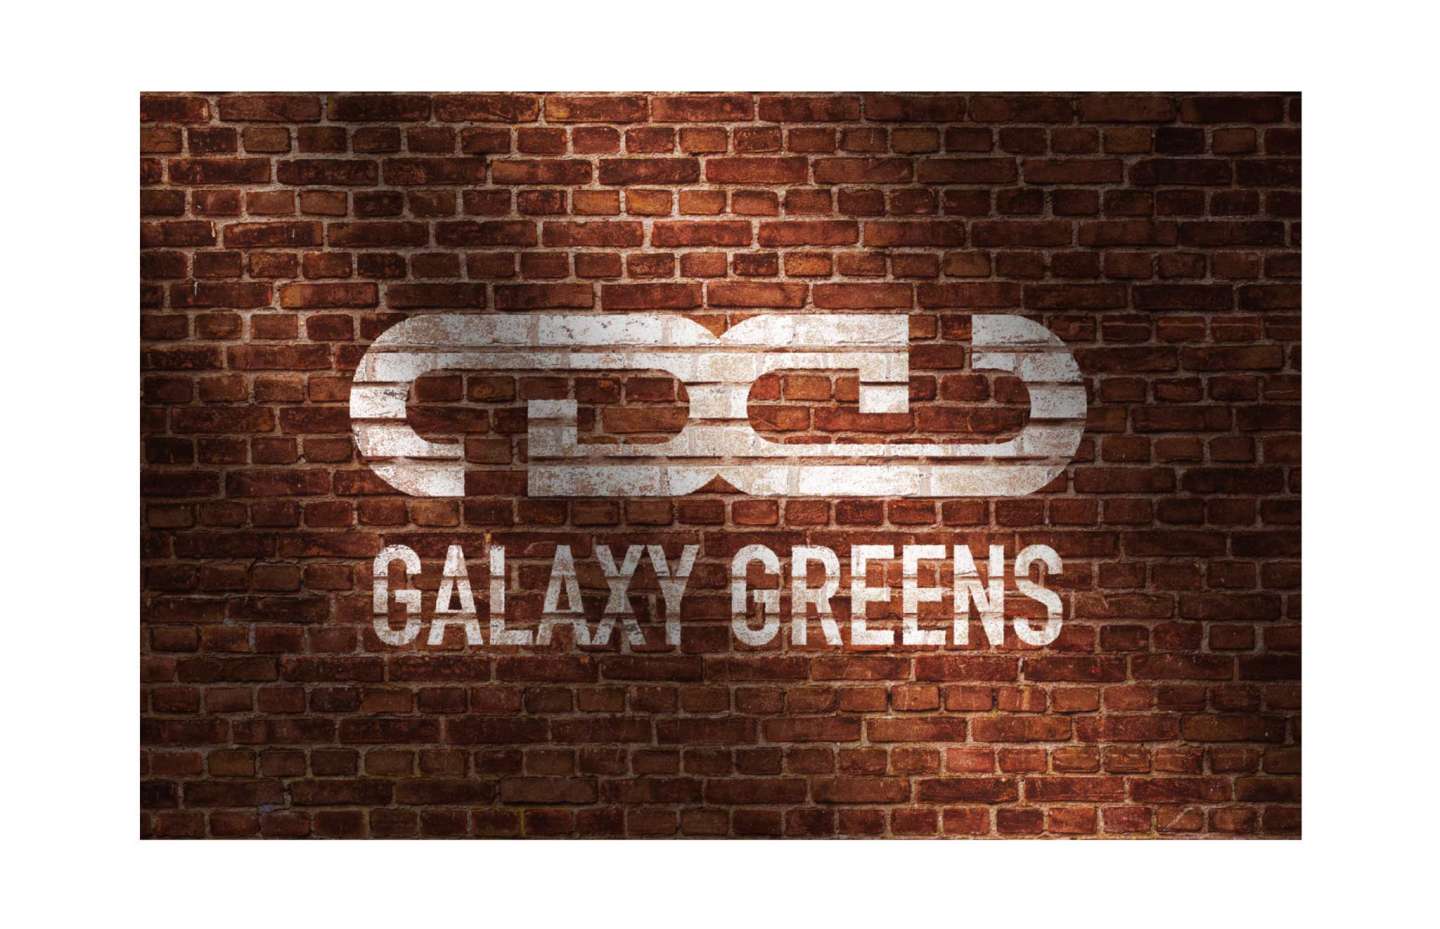 Galaxy Greens